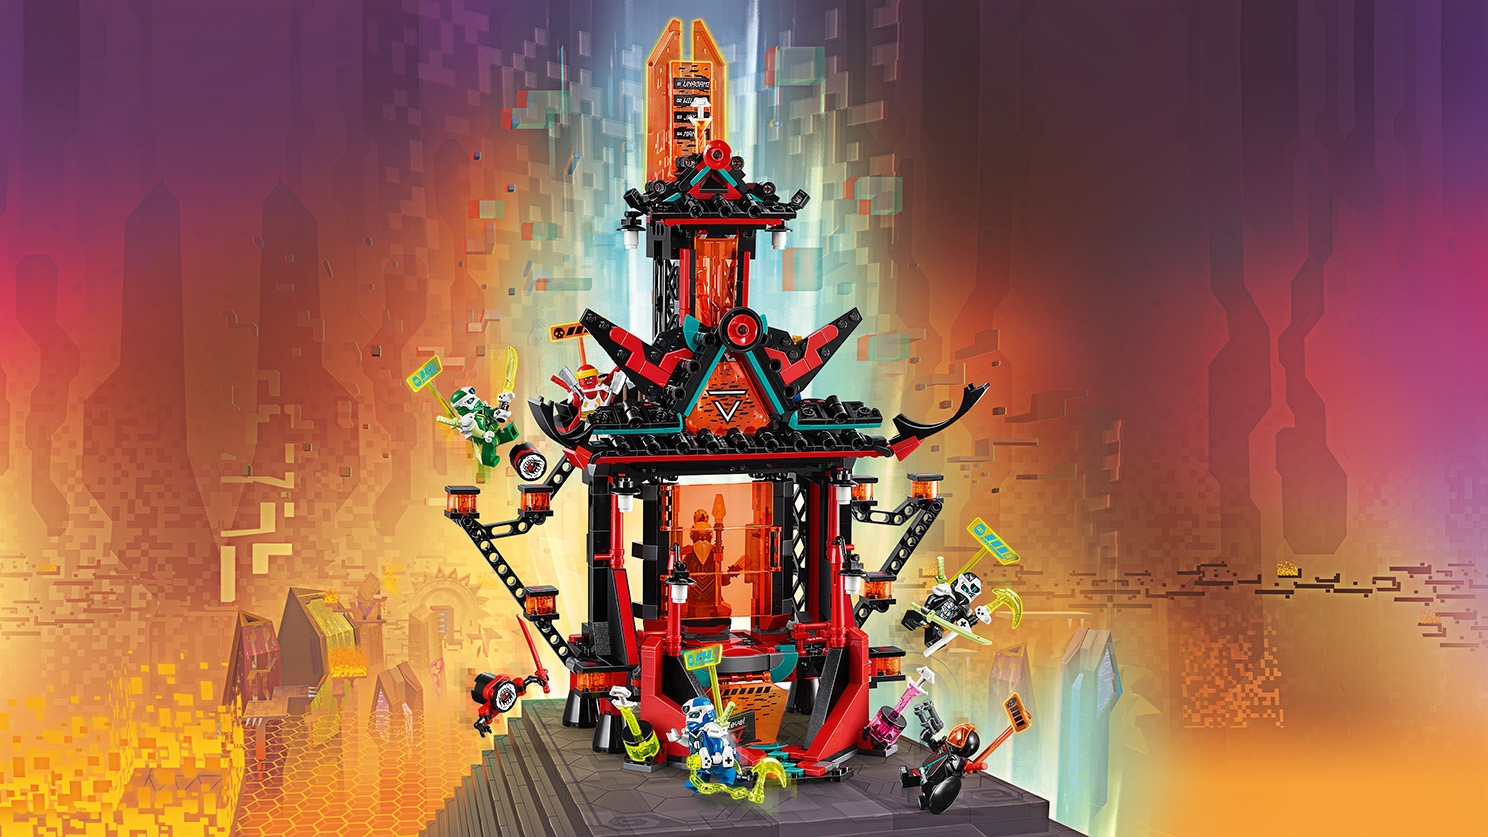 Temple of Madness 71712 - NINJAGO® Sets - LEGO.com for kids